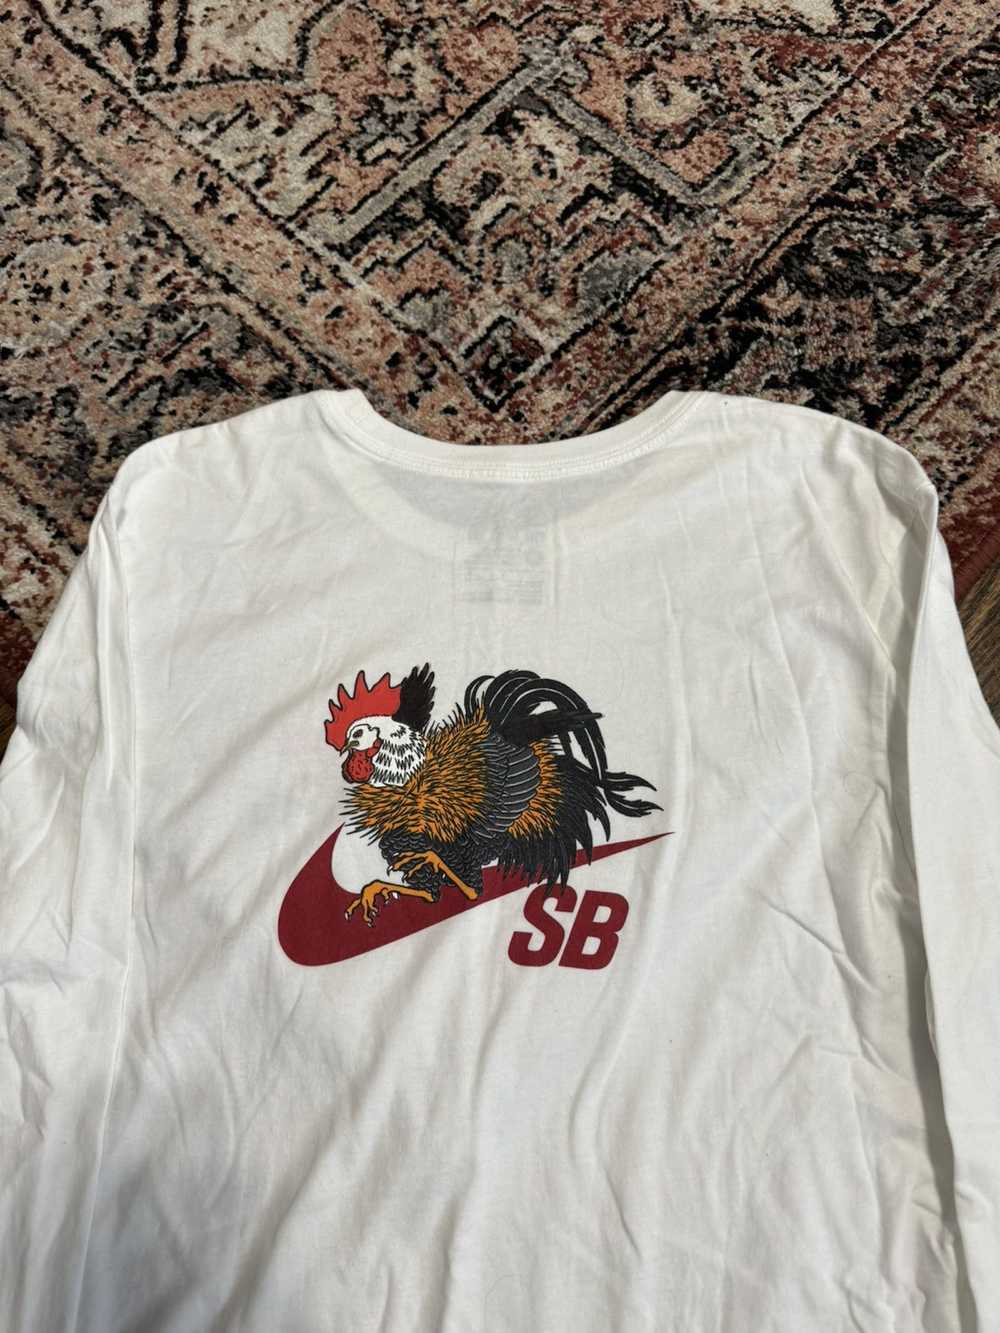 Nike Nike SB Rooster Long Sleeve T-Shirt - image 5